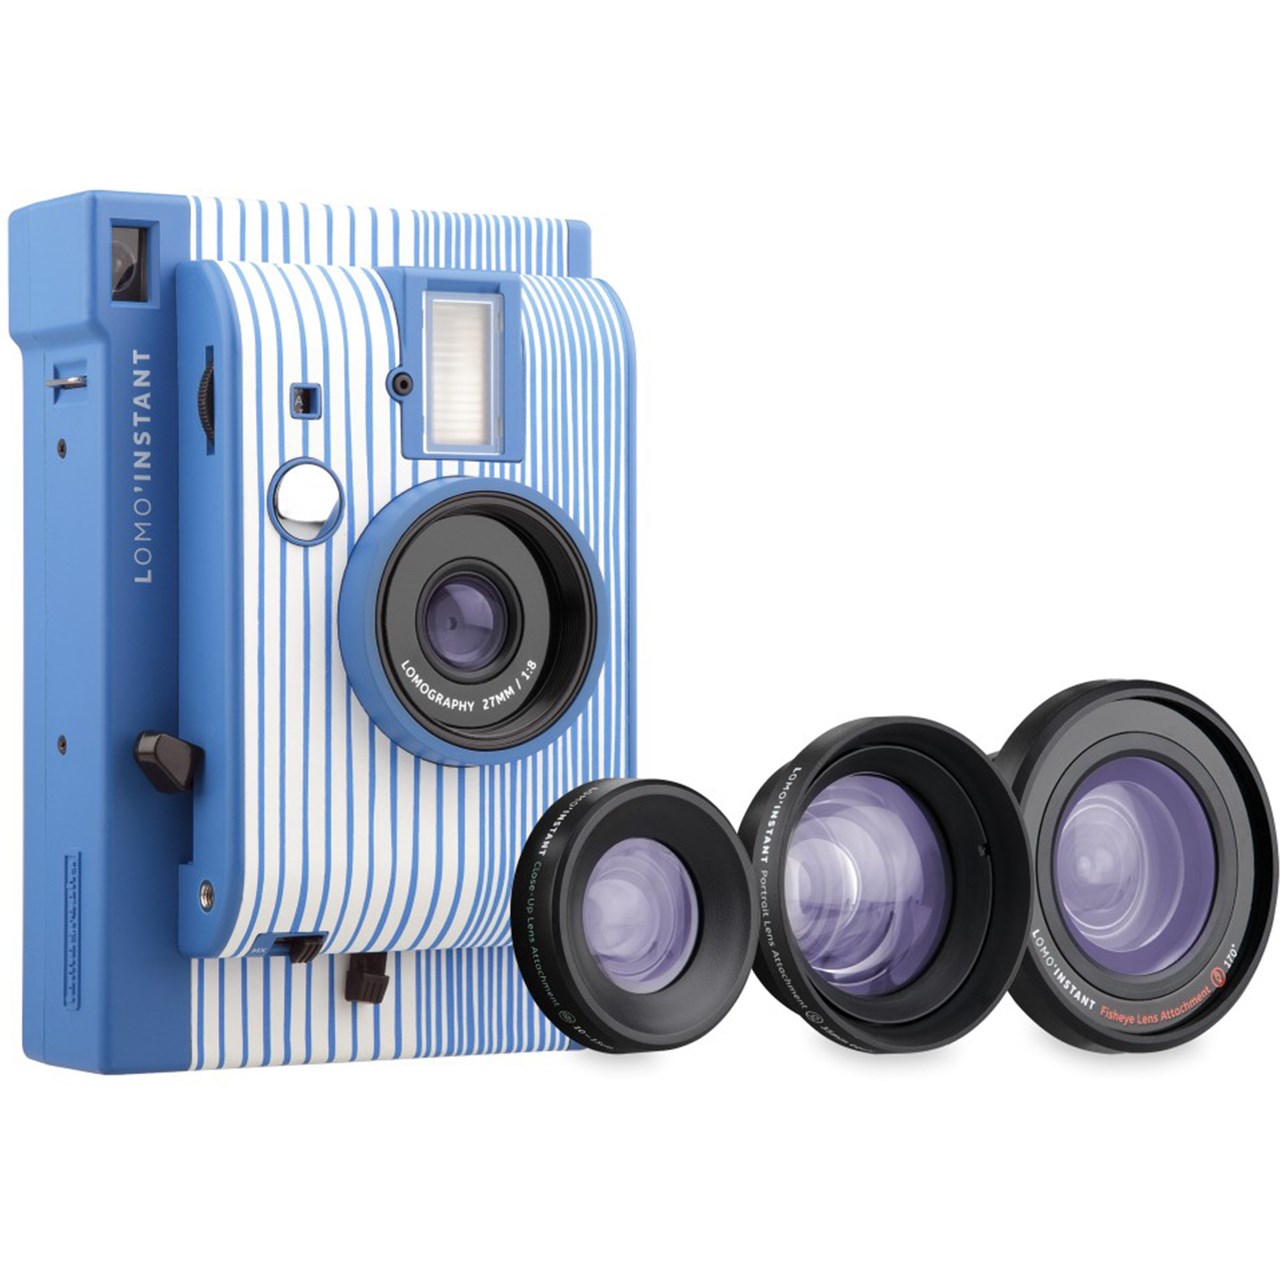 دوربین چاپ سریع لوموگرافی مدل San Sebastian به همراه سه لنز